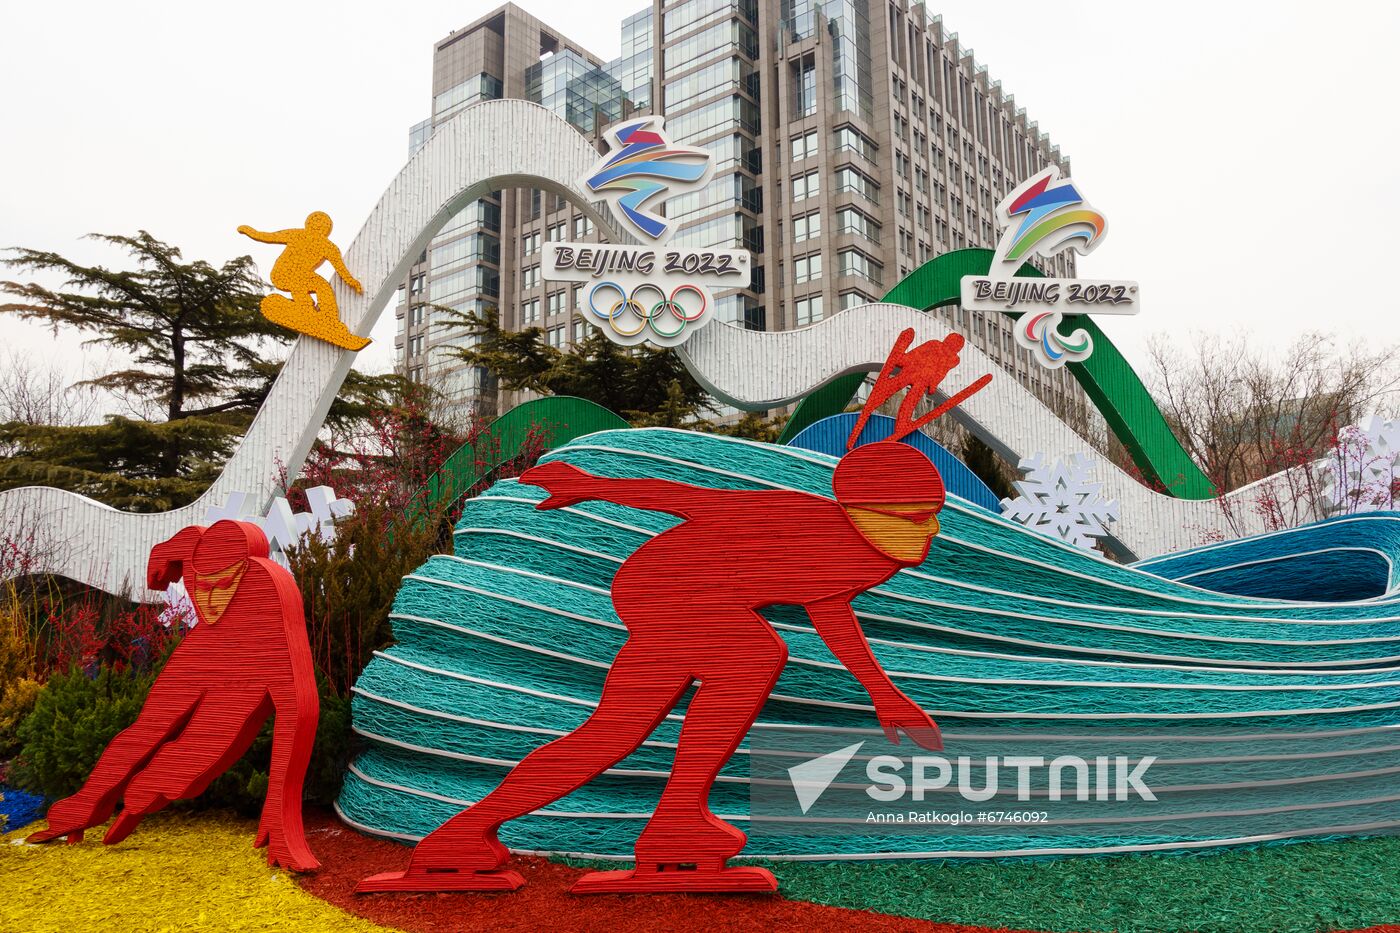 China Olympics 2022 Preparations